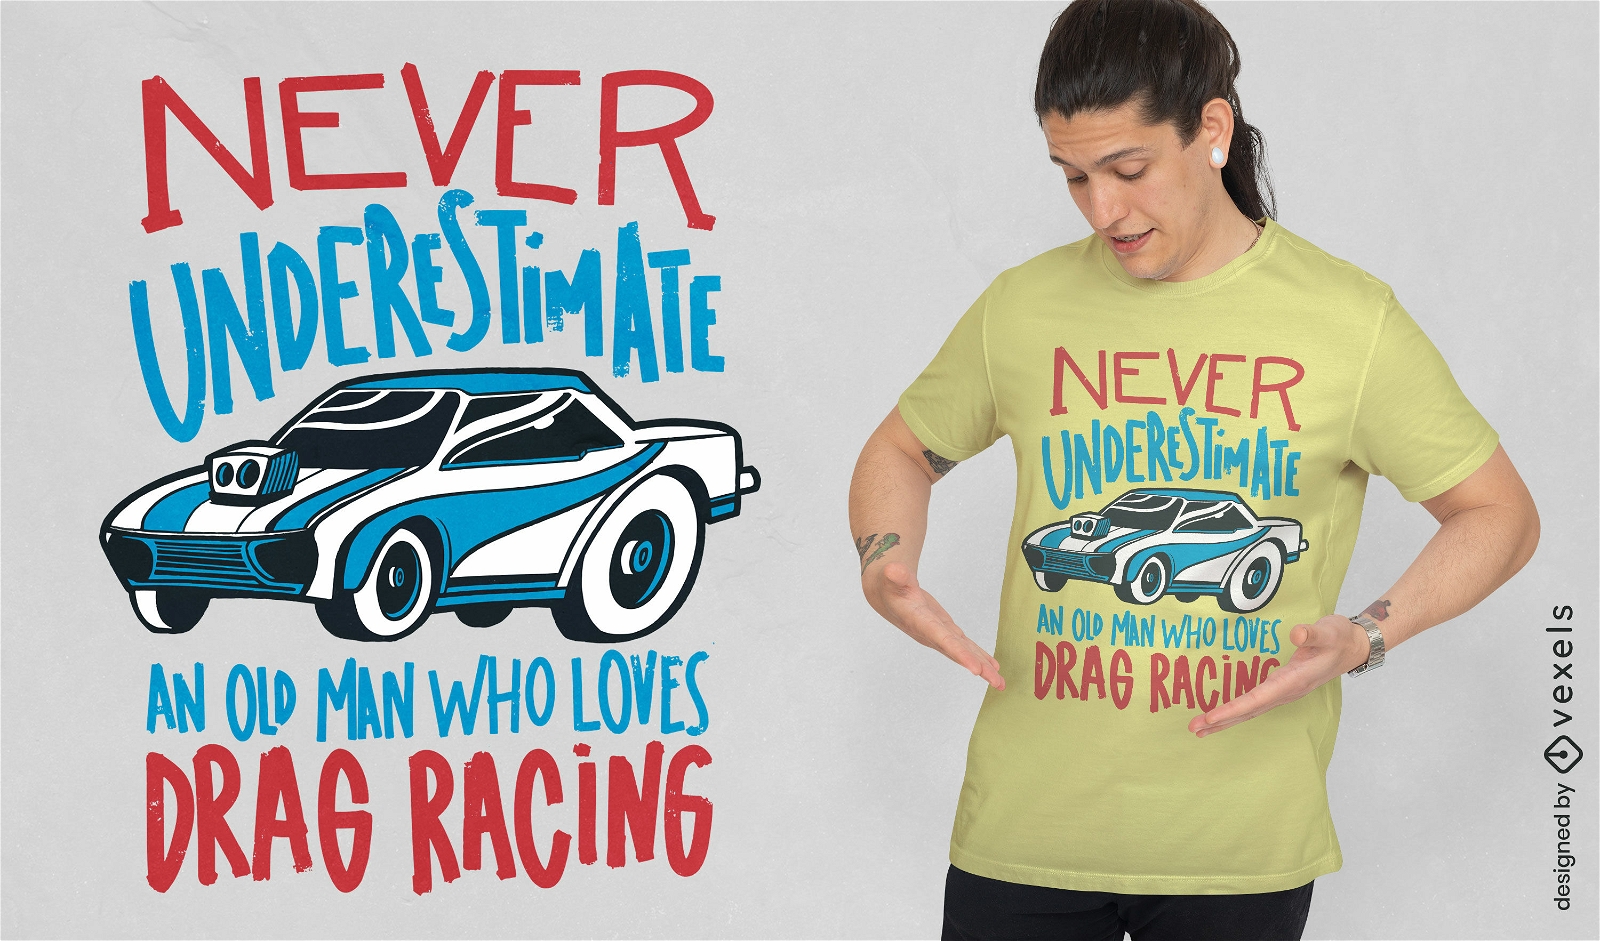 Race car transportation hobby t-shirt design